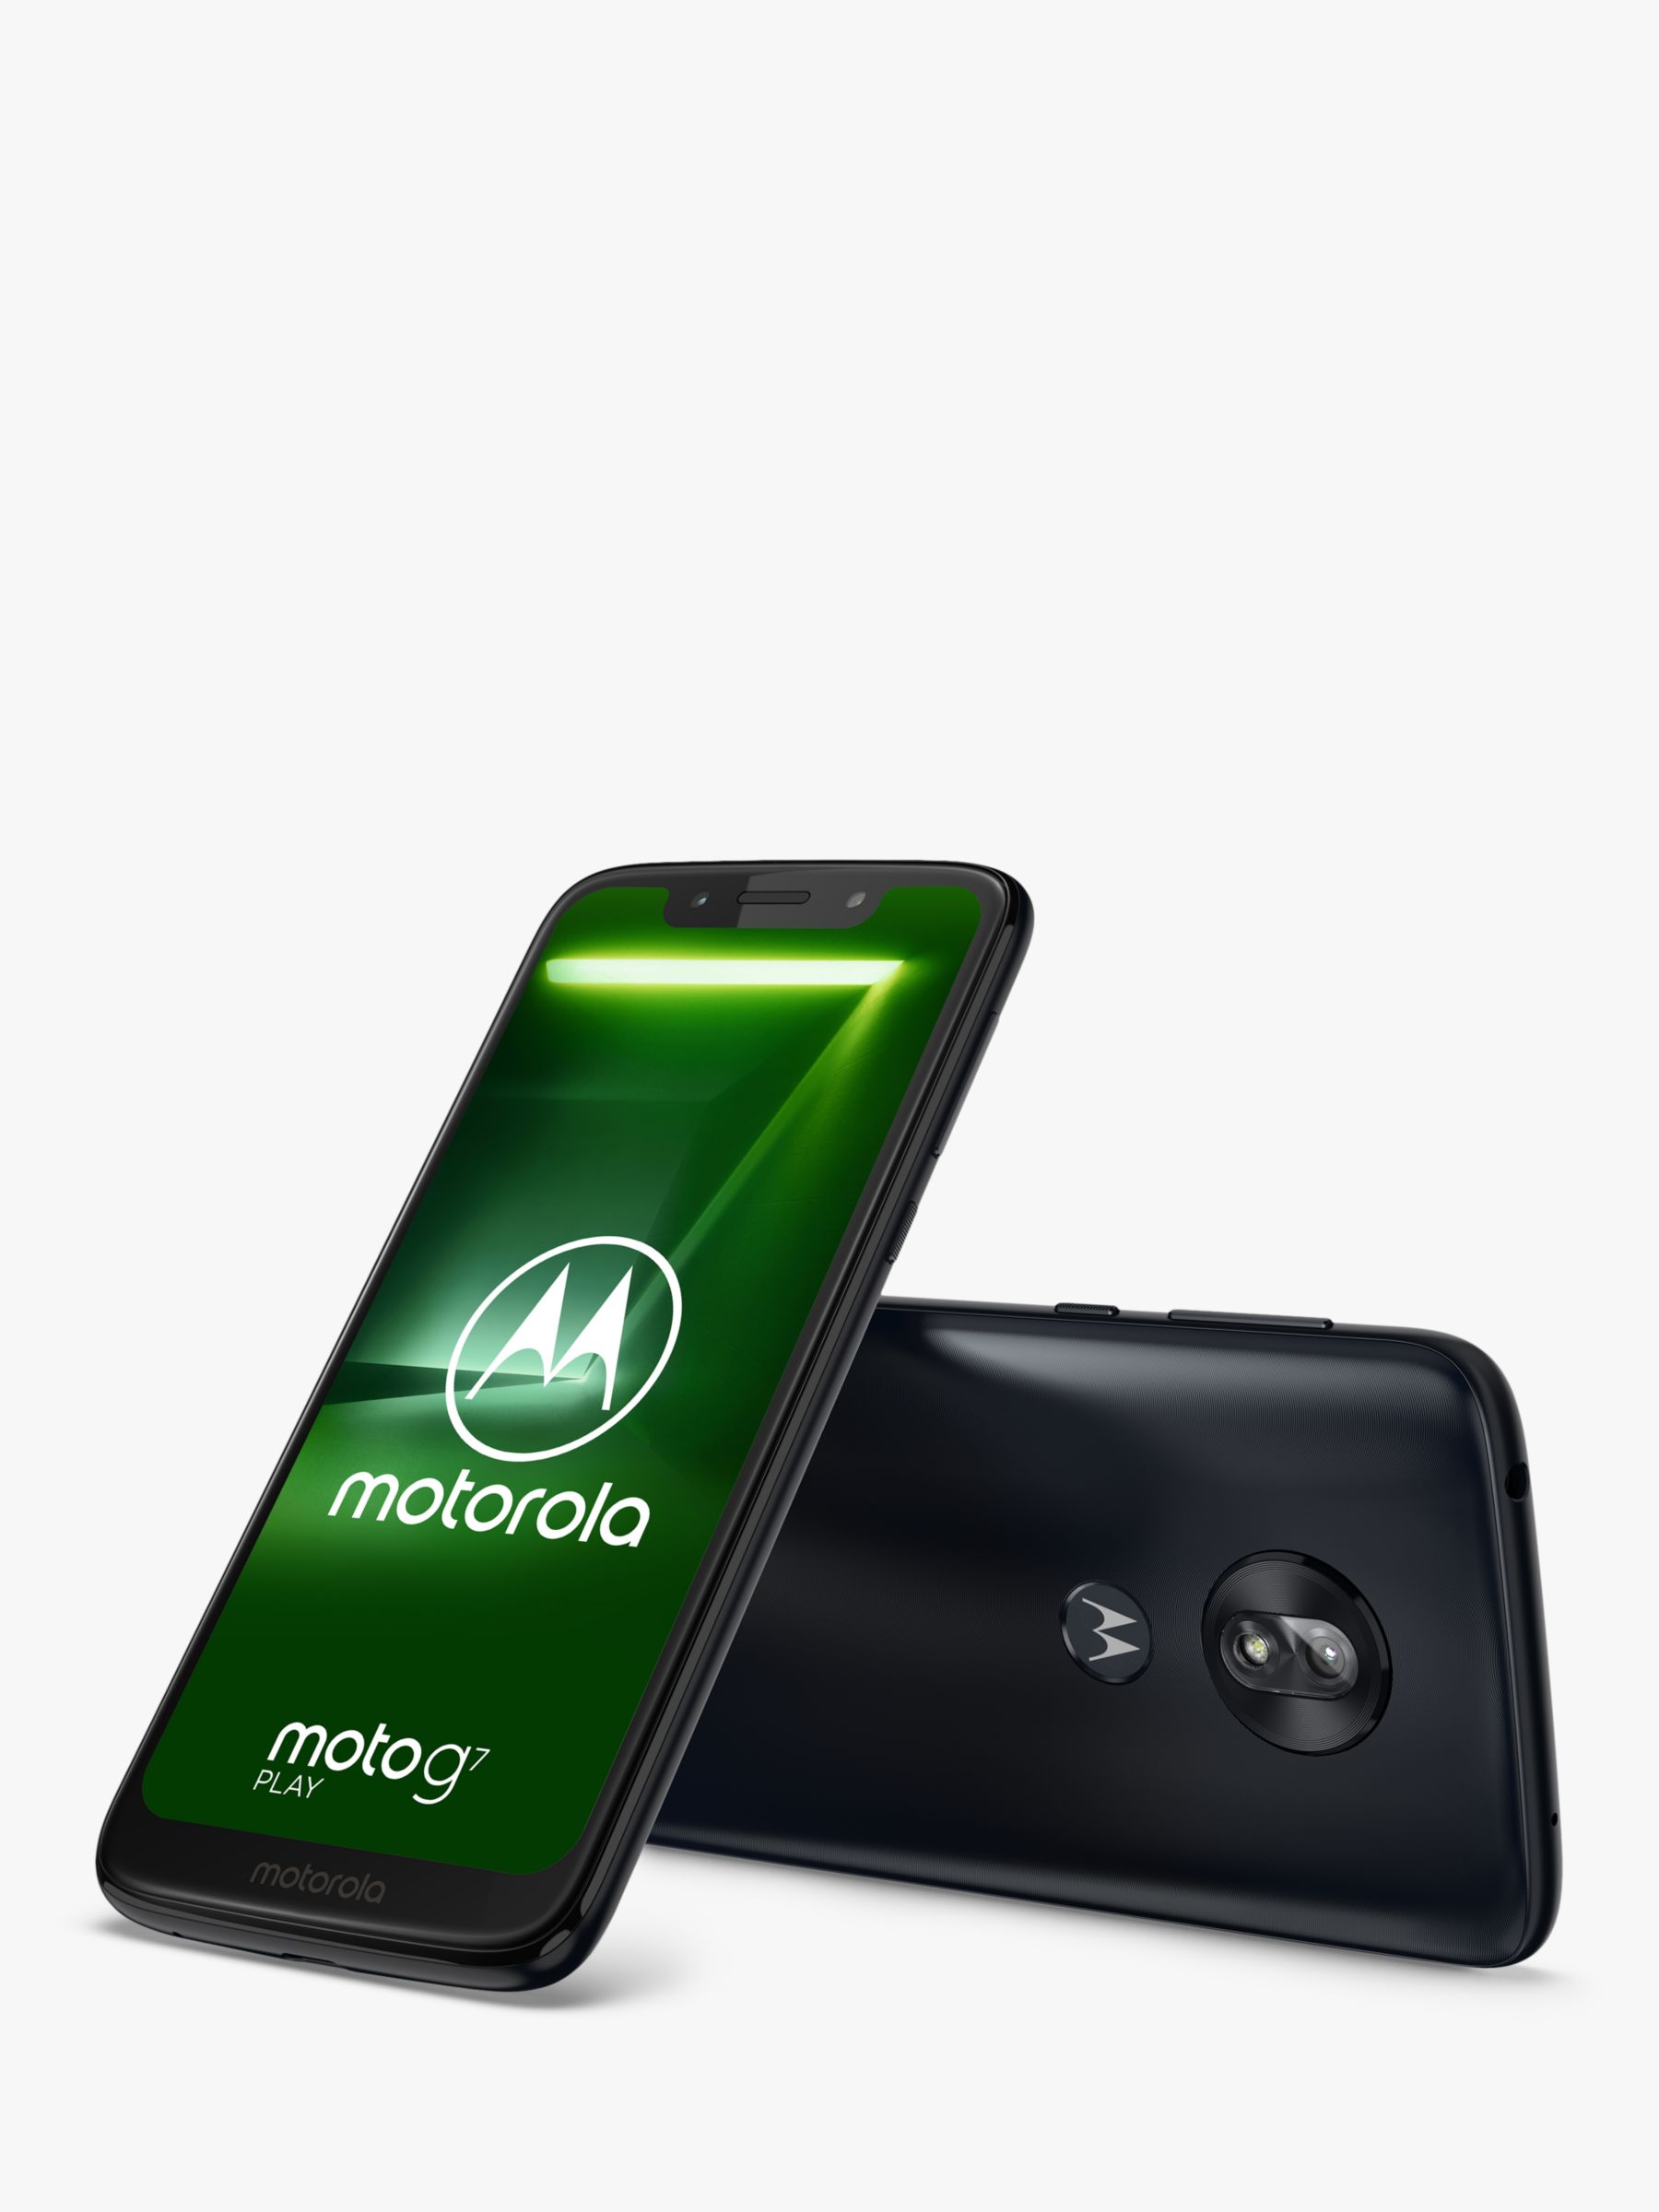 Smartphone, Motorola, Moto G7 Play, XT1952-2, 32 GB, 5.7, Indigo